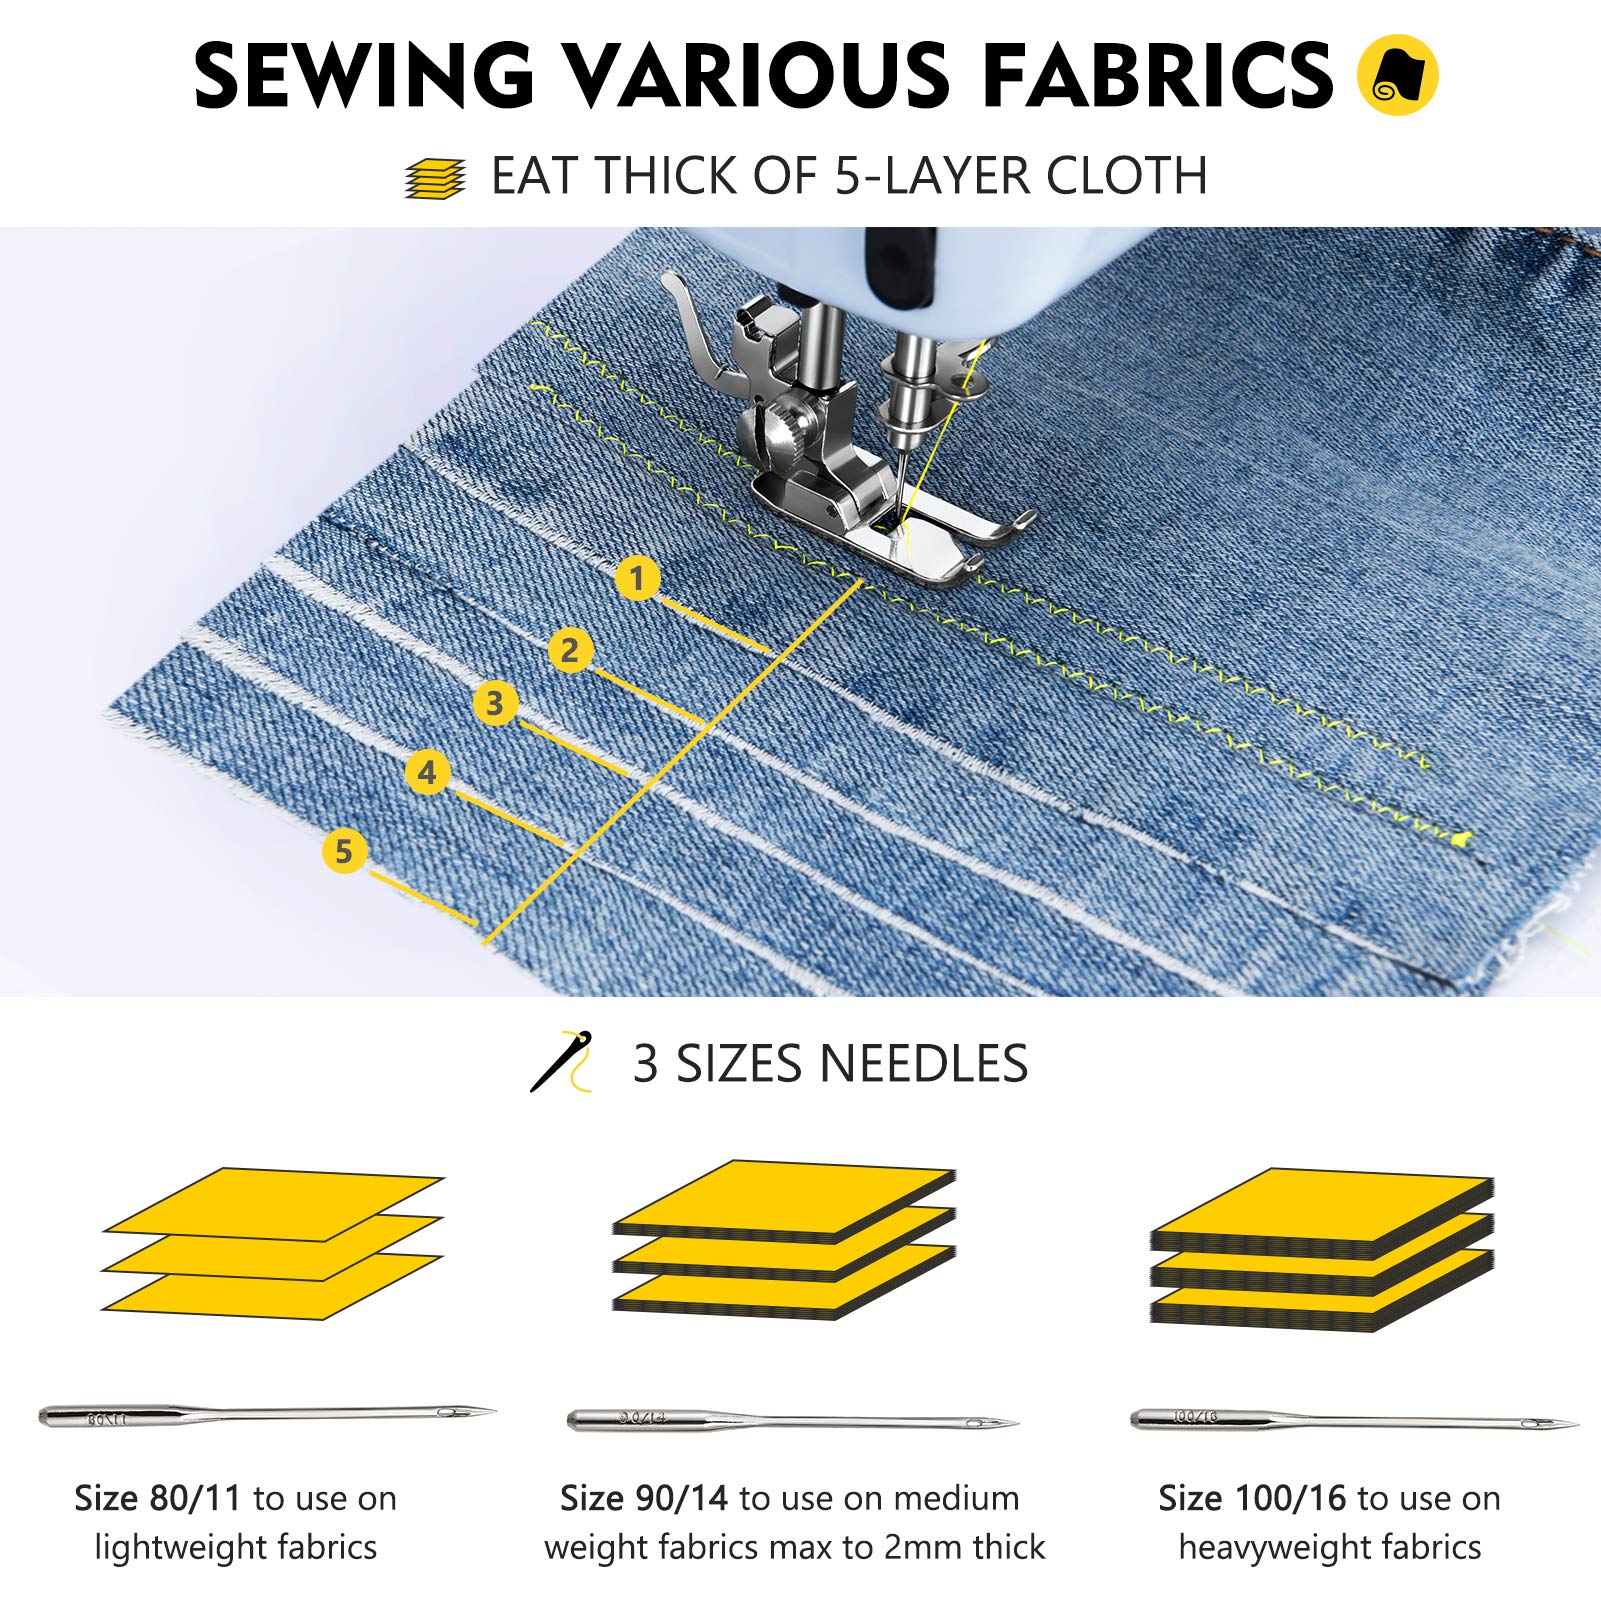 Portable Sewing Machine Double Speeds for Beginner Art Craft 12 Stitches,  Blue